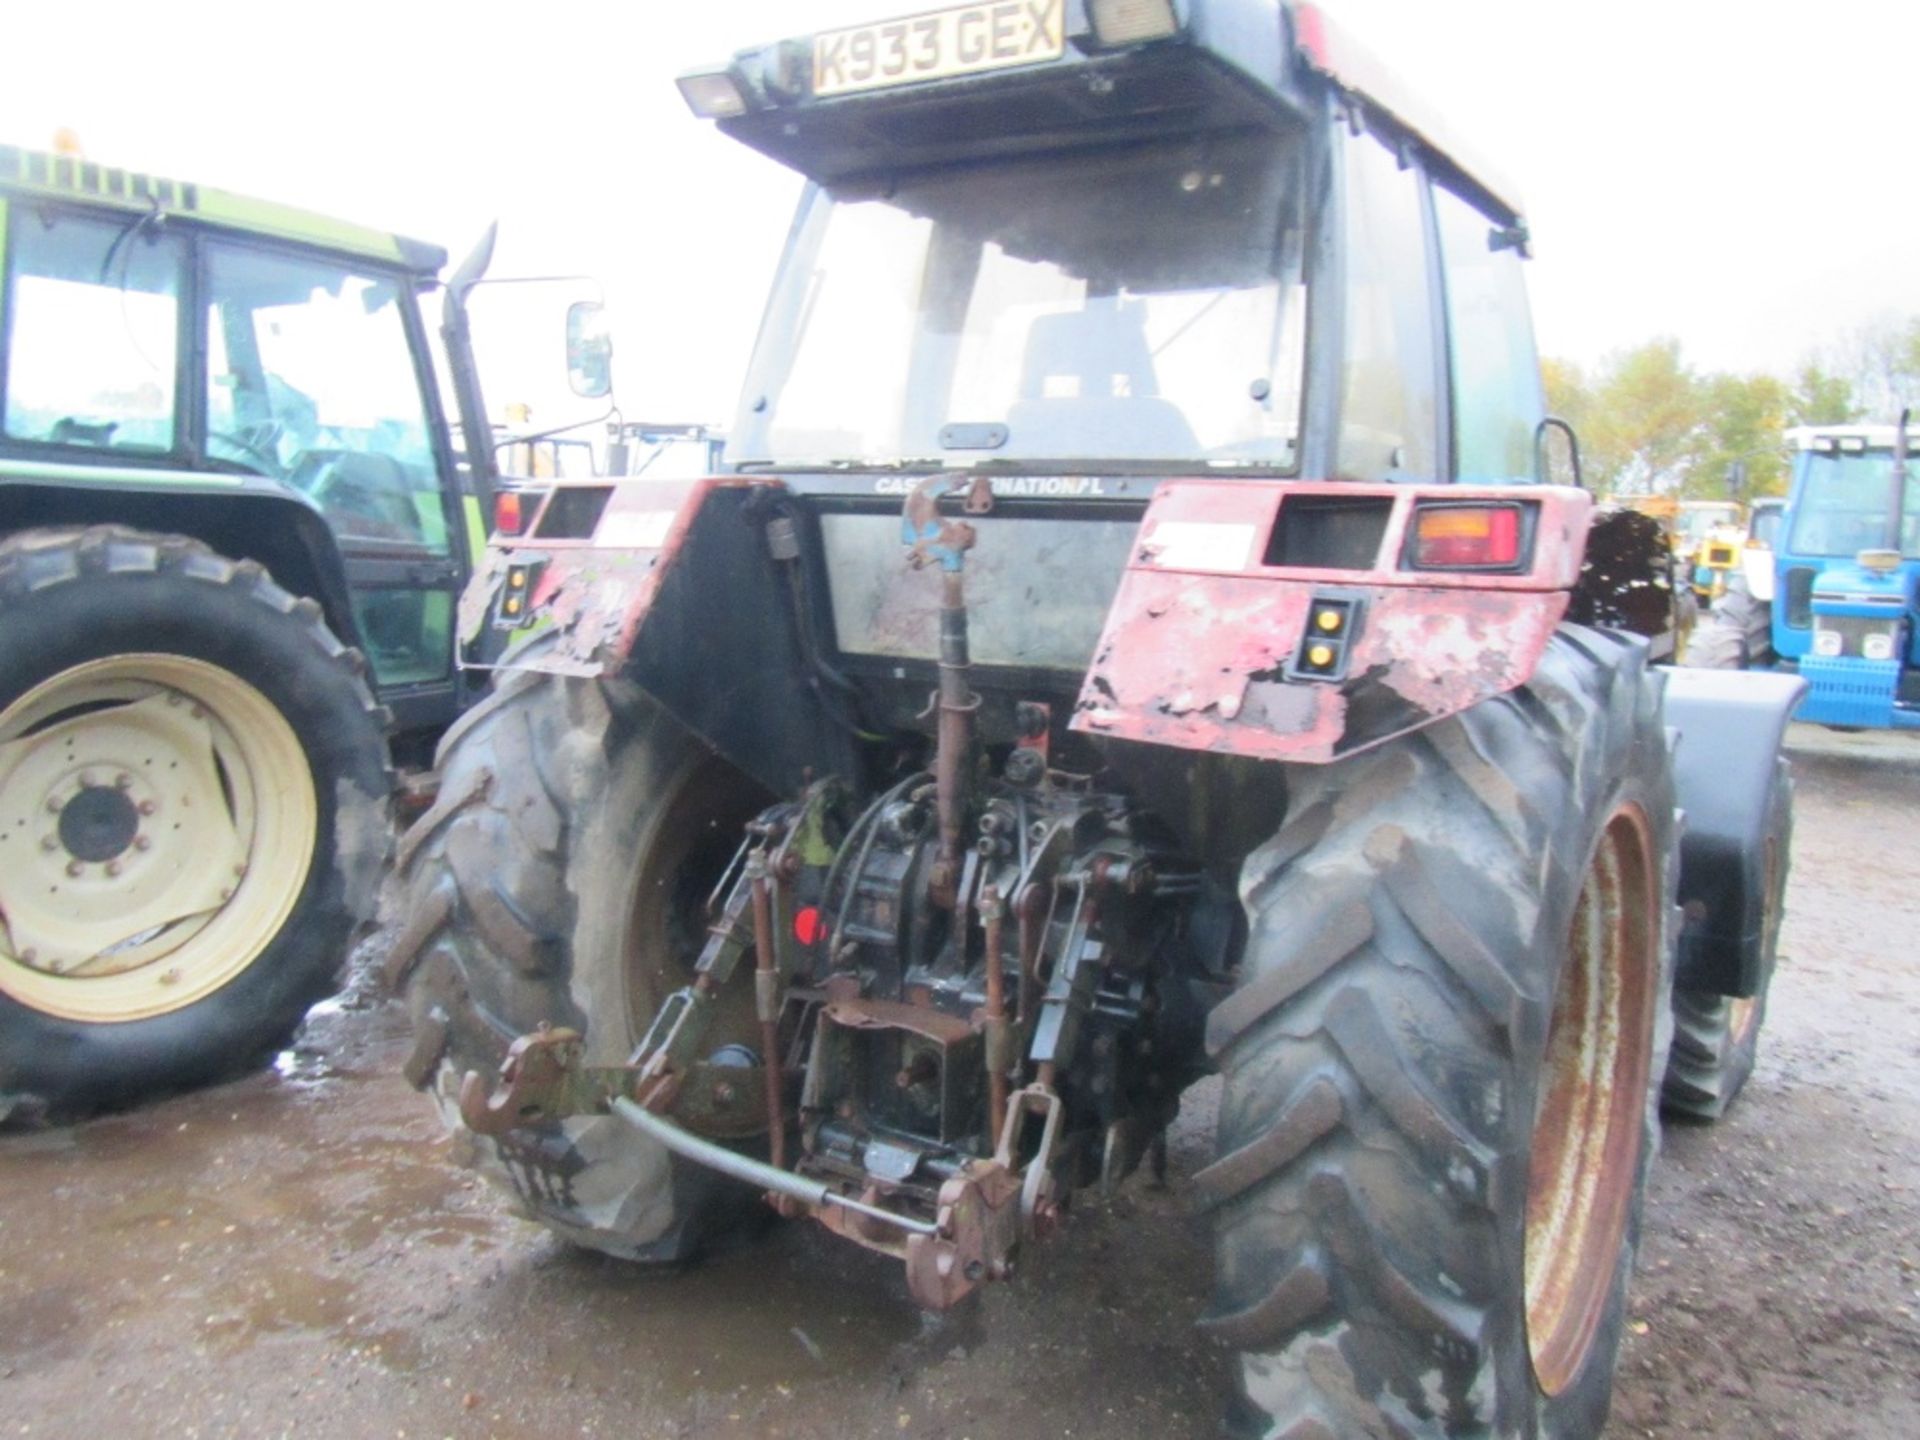 Case International Maxxum 5140 Tractor. Reg. No. K933 GEX - Image 4 of 5